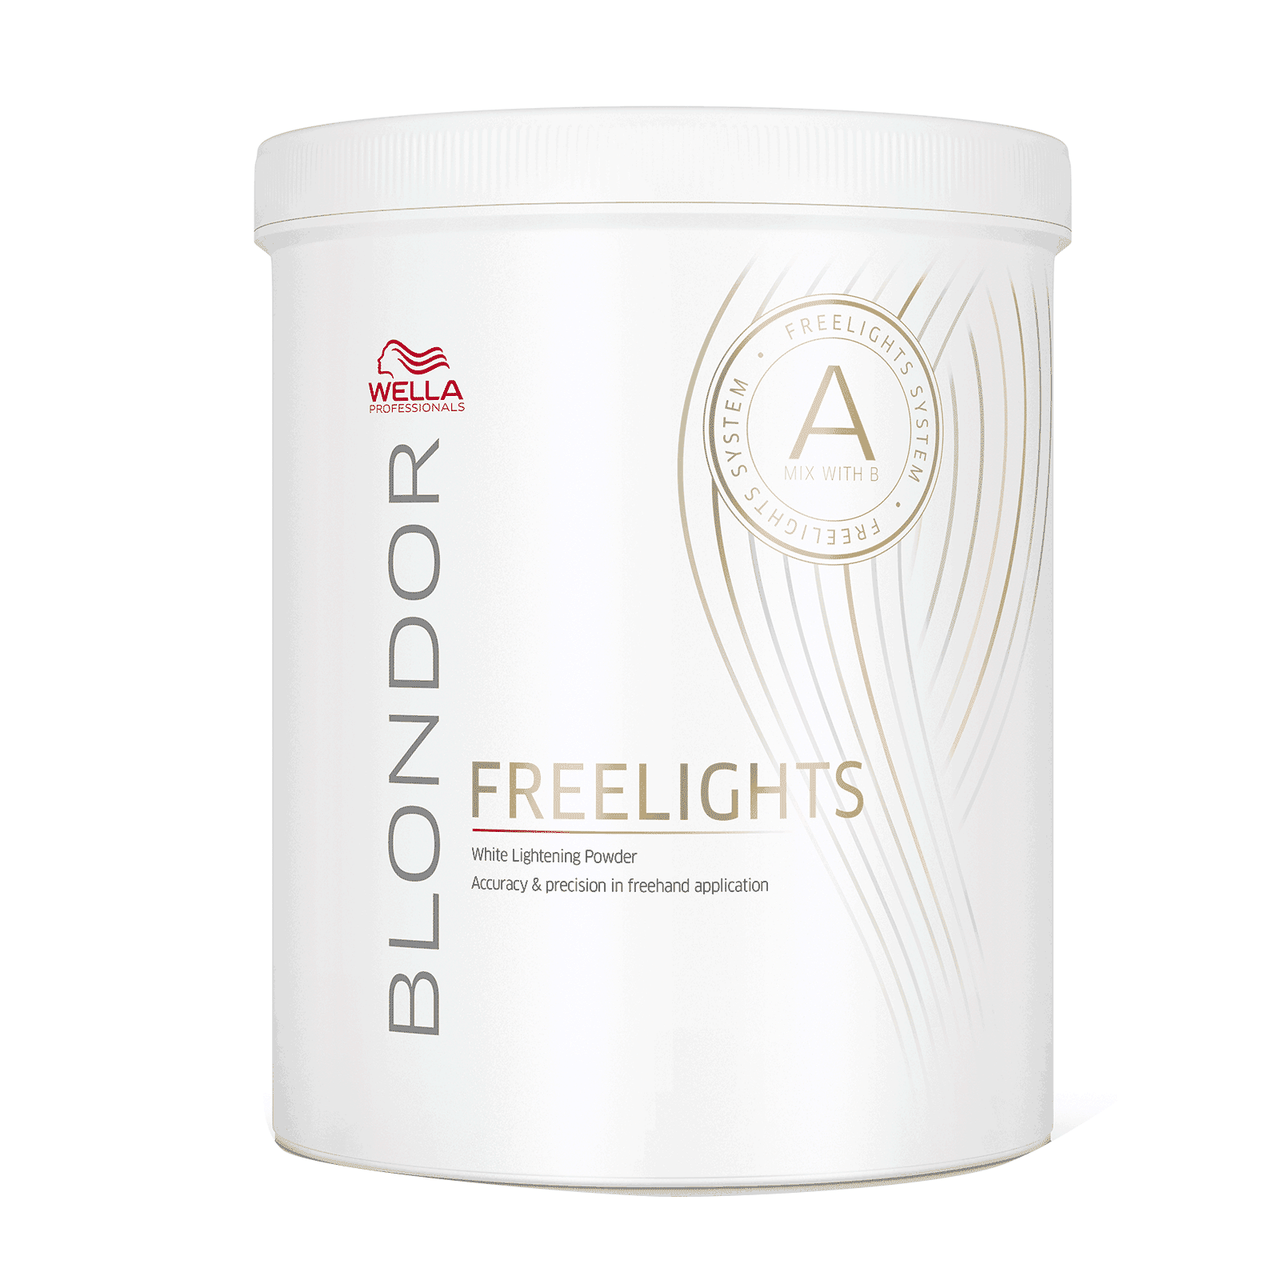 WELLA - BLONDOR_Blondor Freelights white lightening powder 800g_Cosmetic World